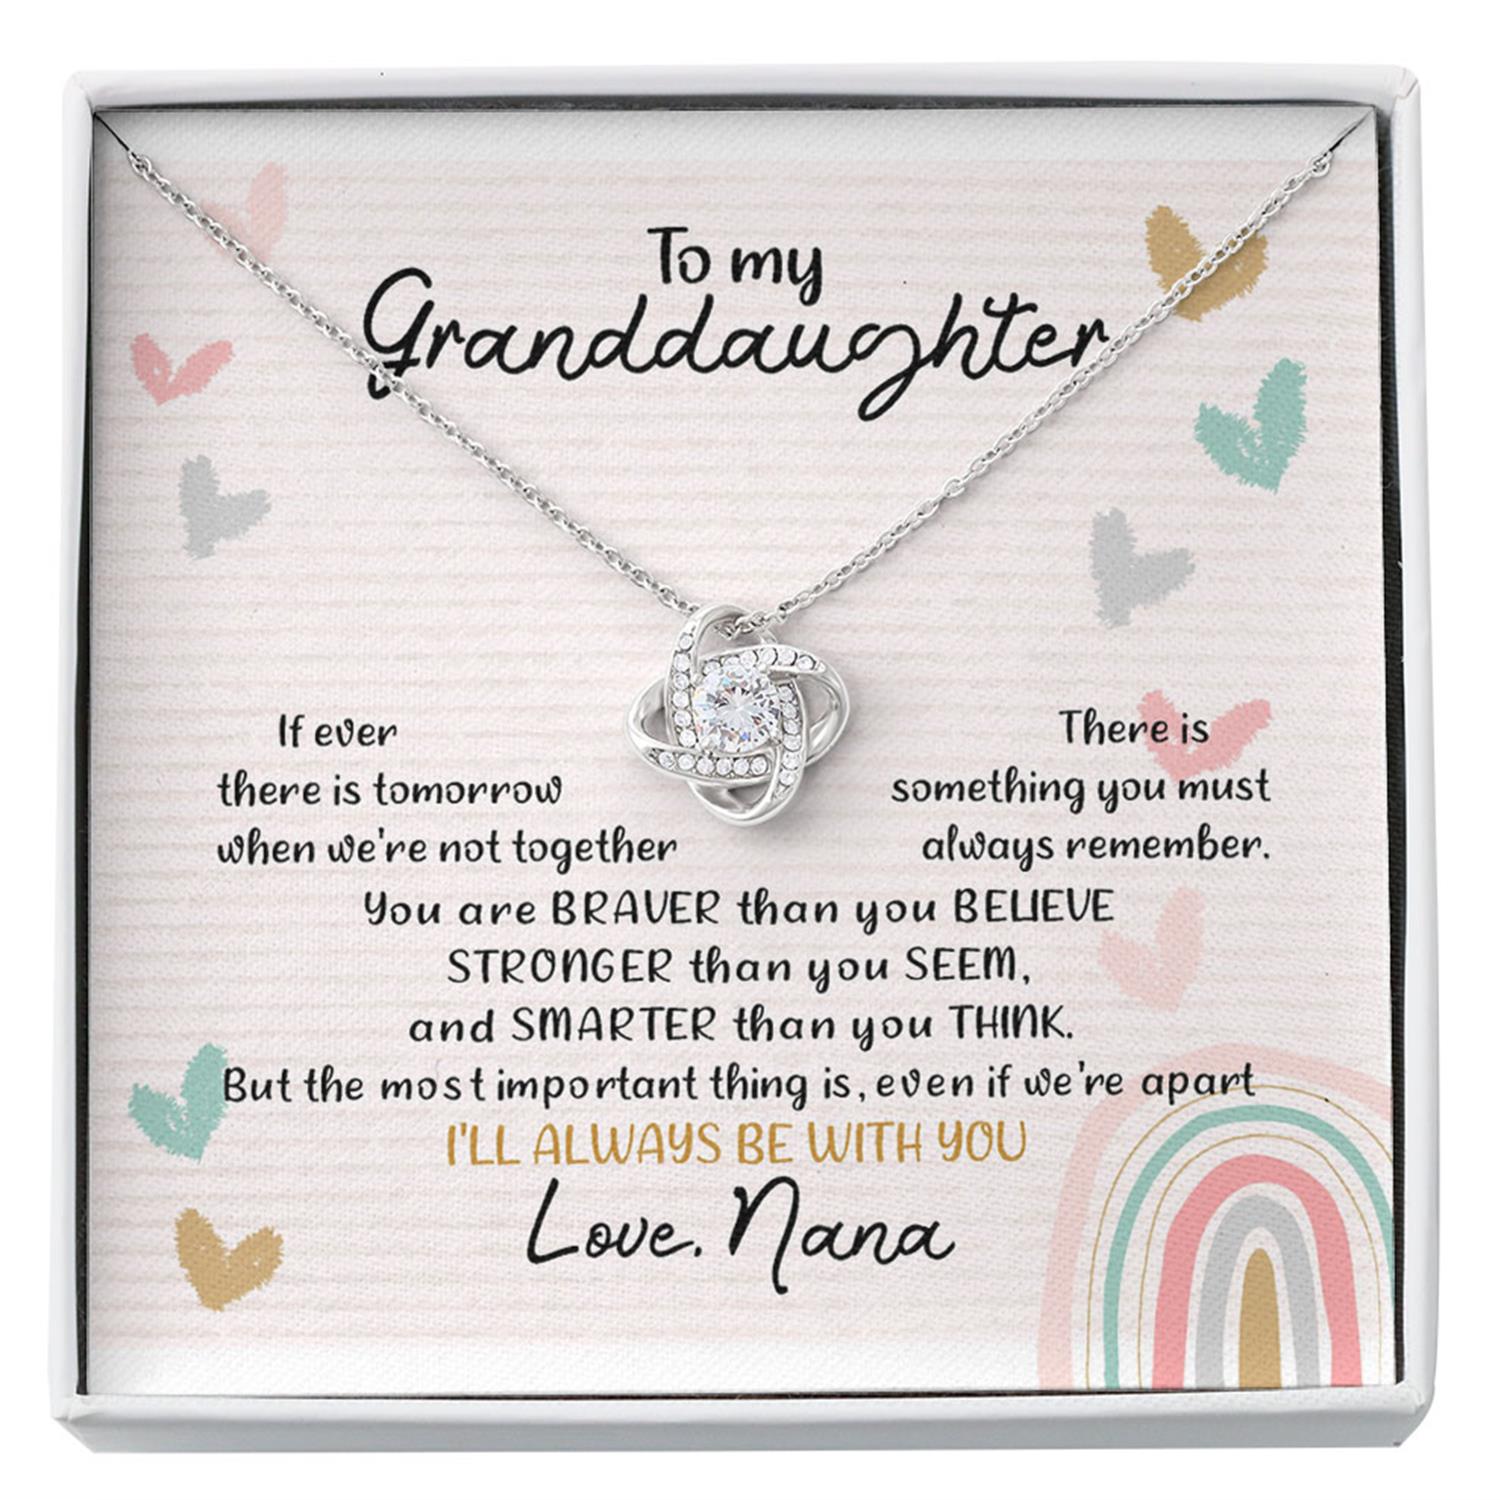 Granddaughter Necklace, To My Granddaughter Love Nana Custom Necklace